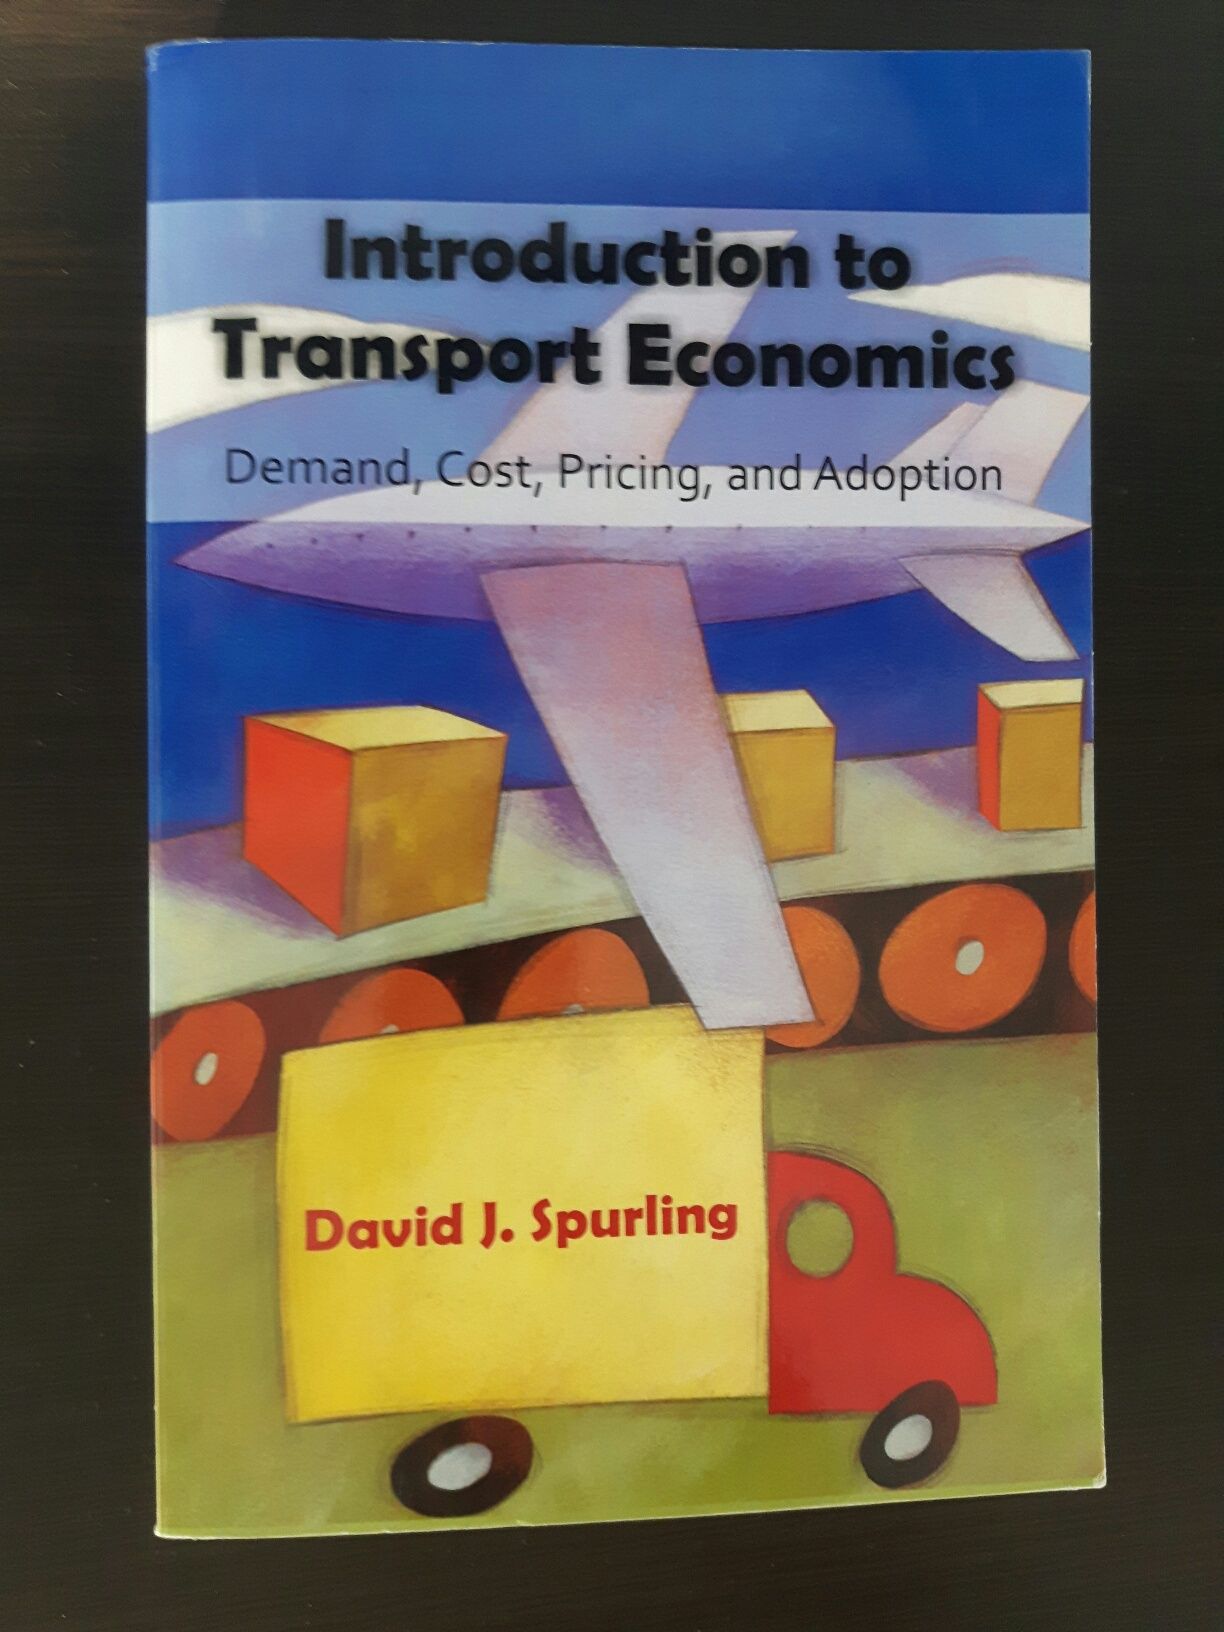 David J. Spurling
Introduction to Transport Economics: Demand, Cost